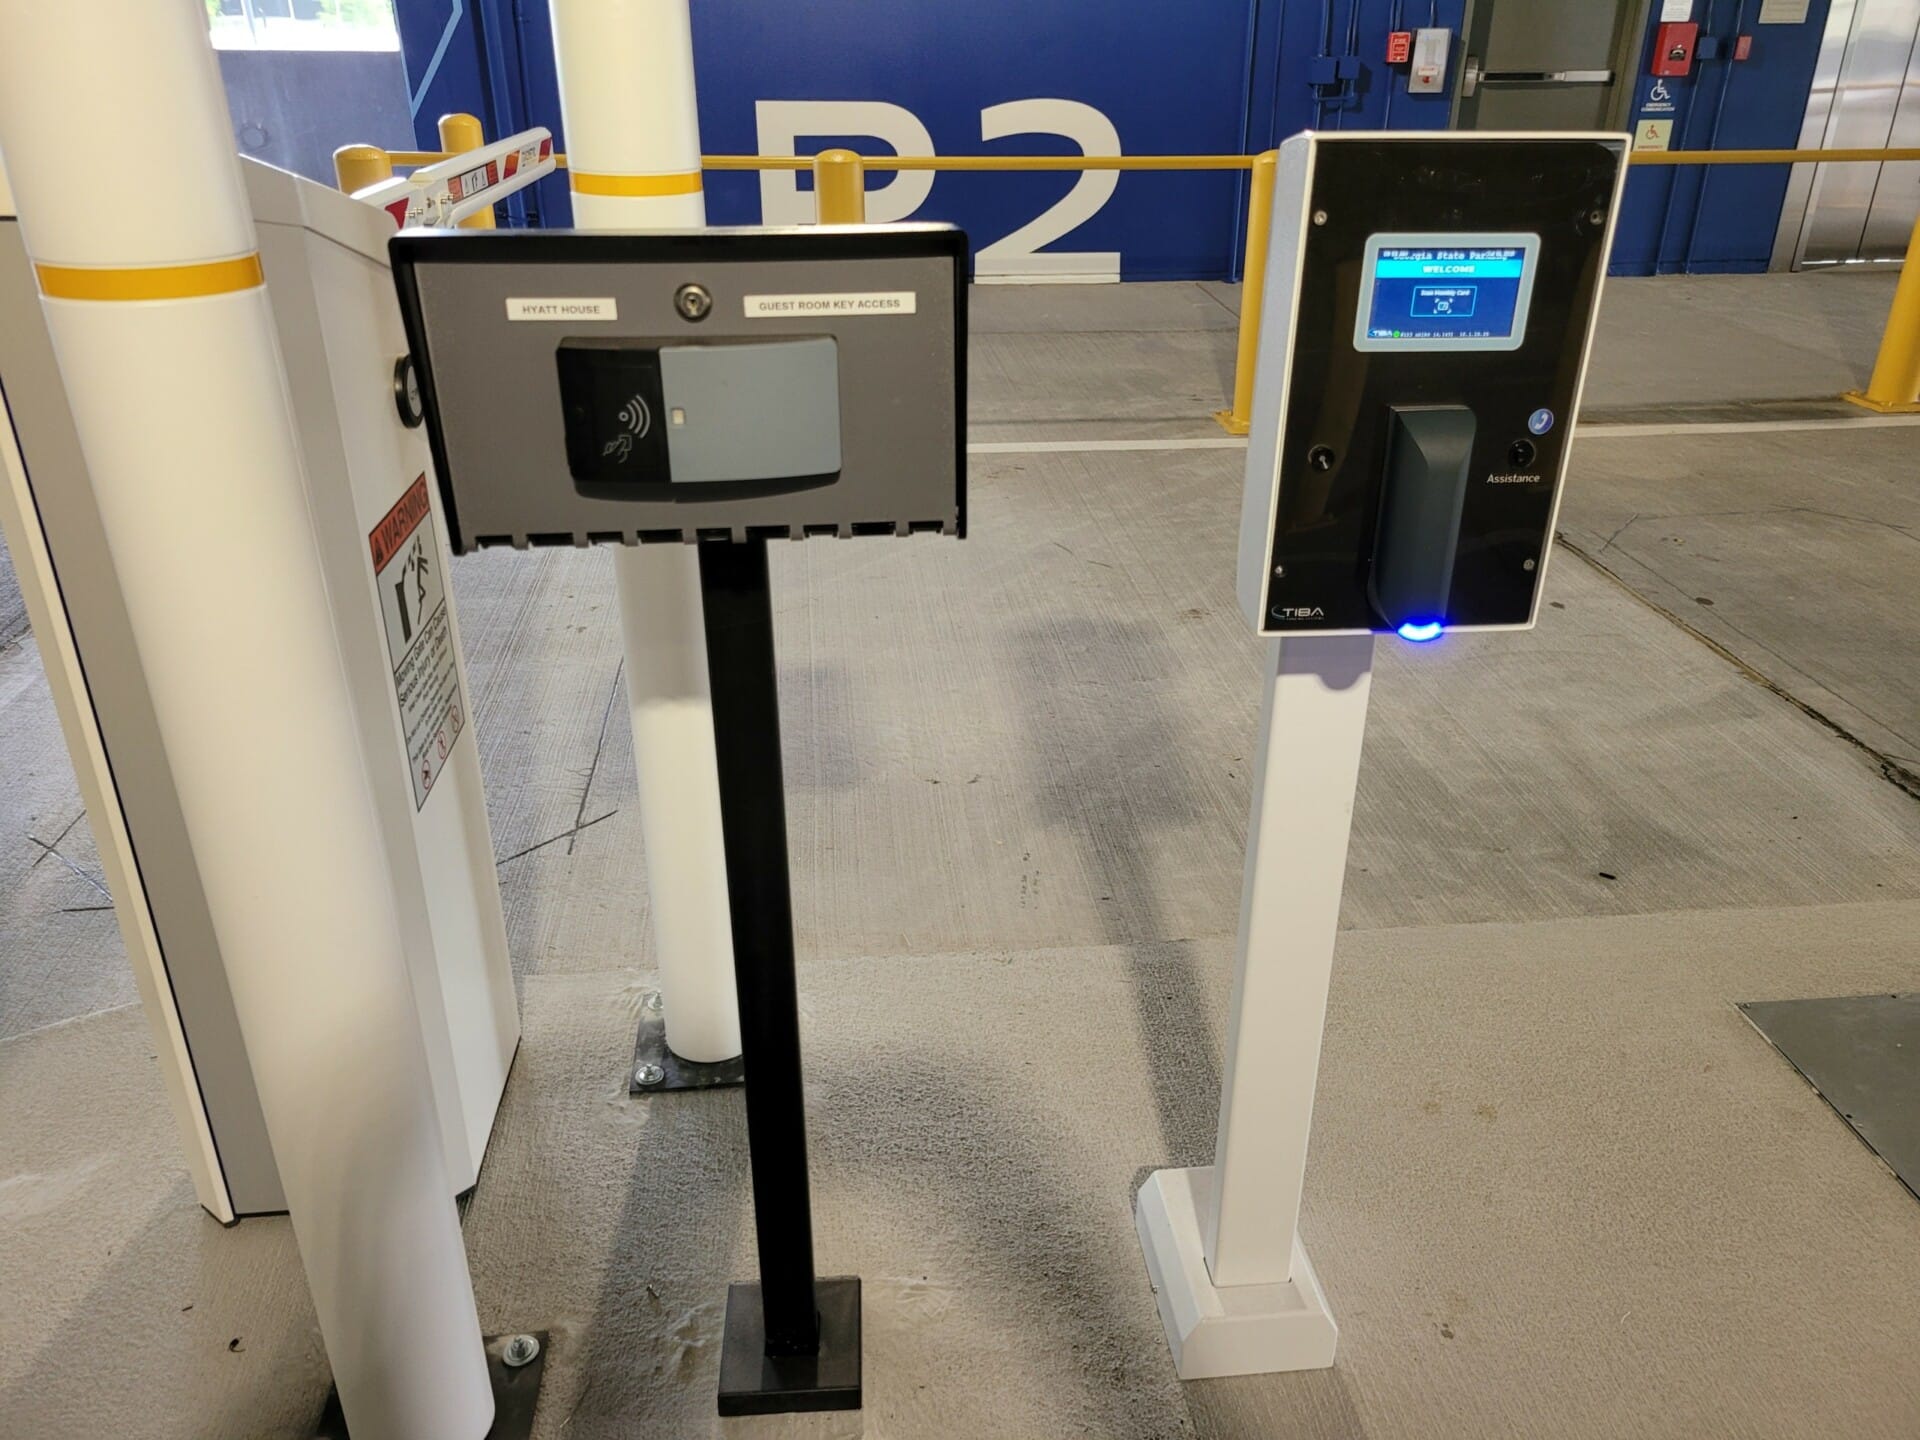 Blue light shines on keycard scanner for secure parking entry.